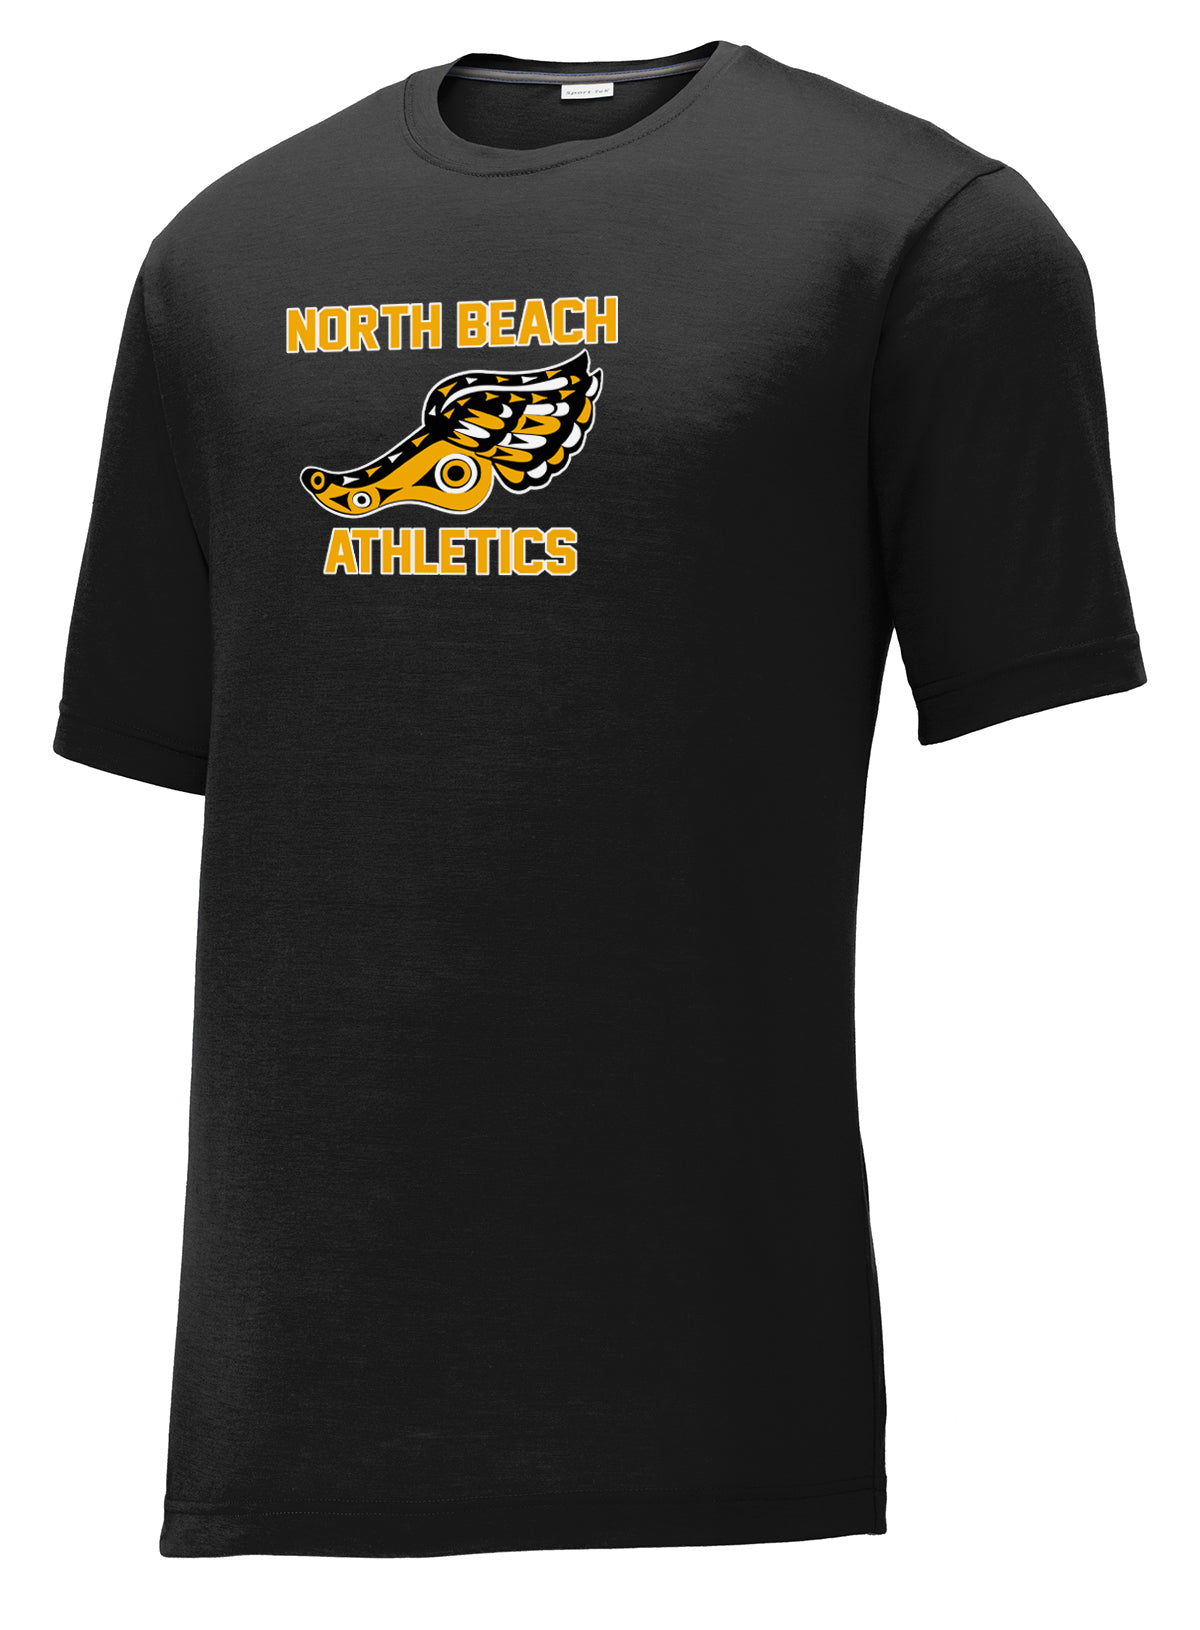 North Beach Athletics CottonTouch Performance T-Shirt